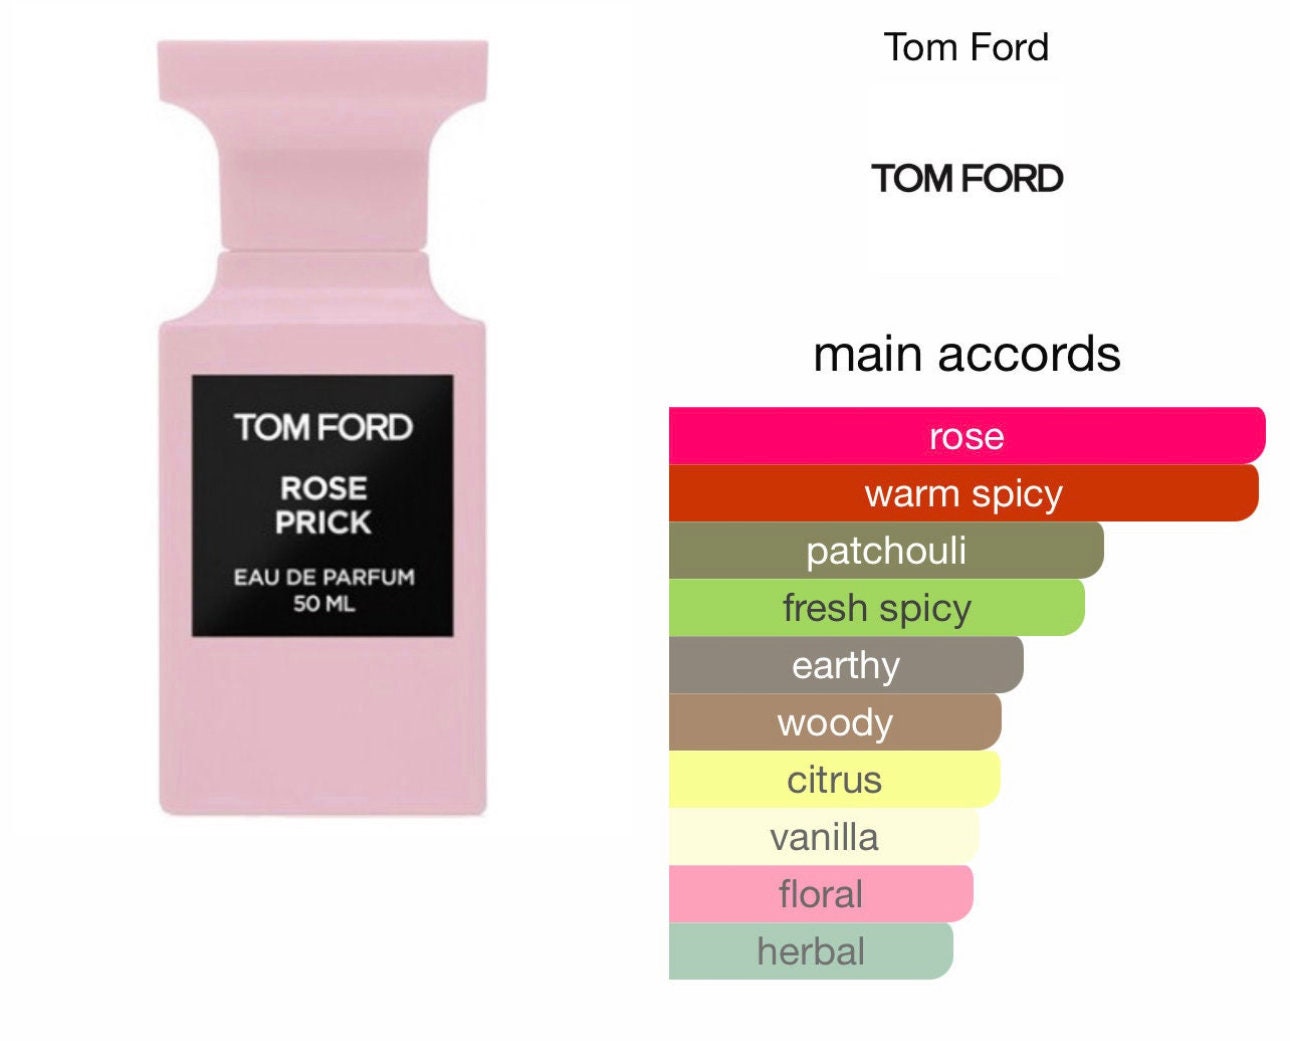 Tom Ford - Rose Prick Unisex A+ Tom Ford Premium Perfume Oils